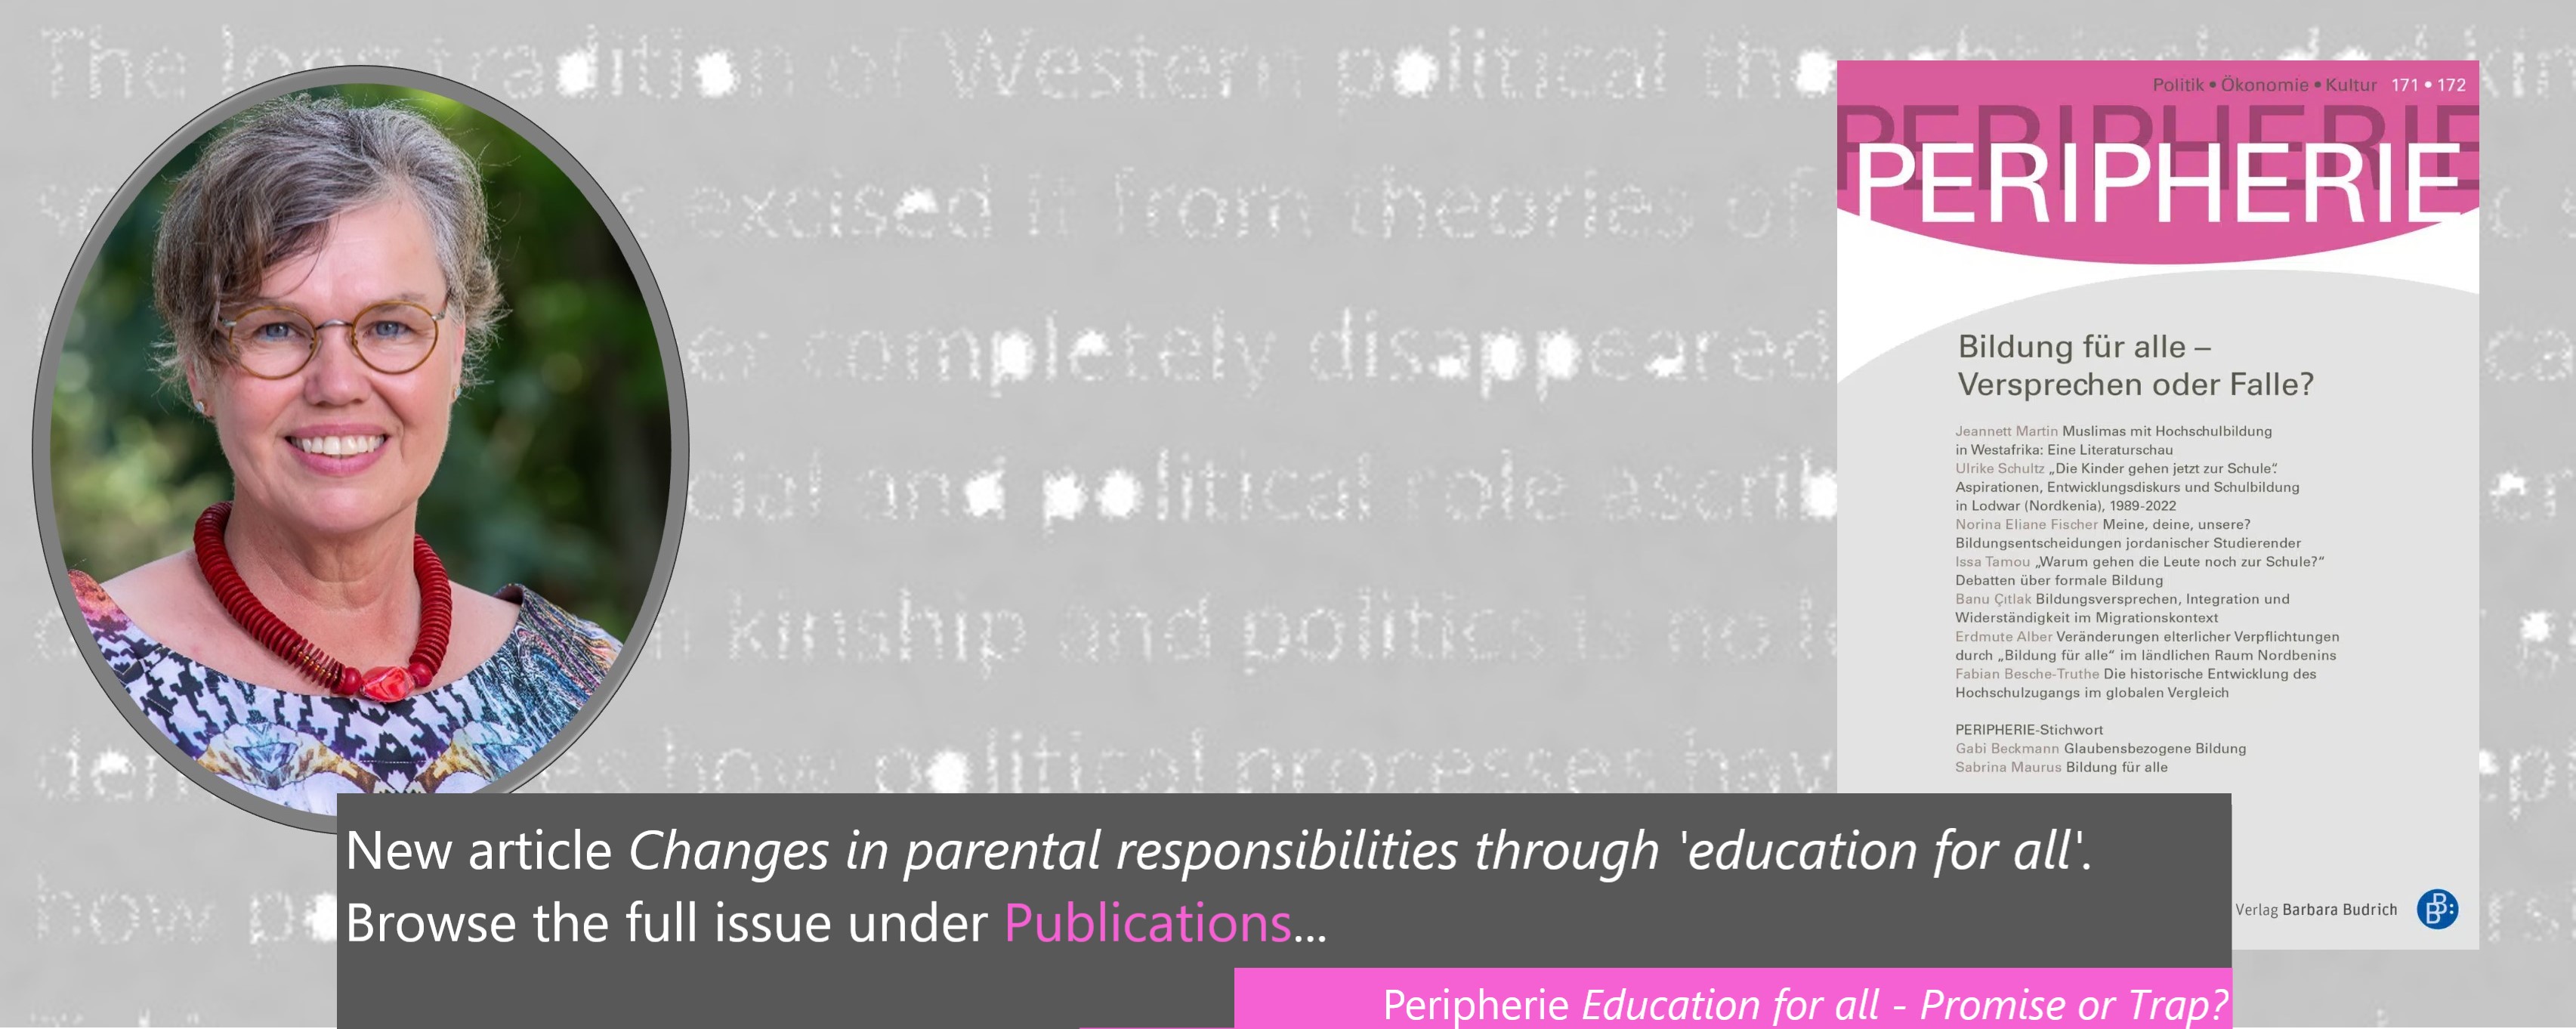 Slider Publication on Education for all